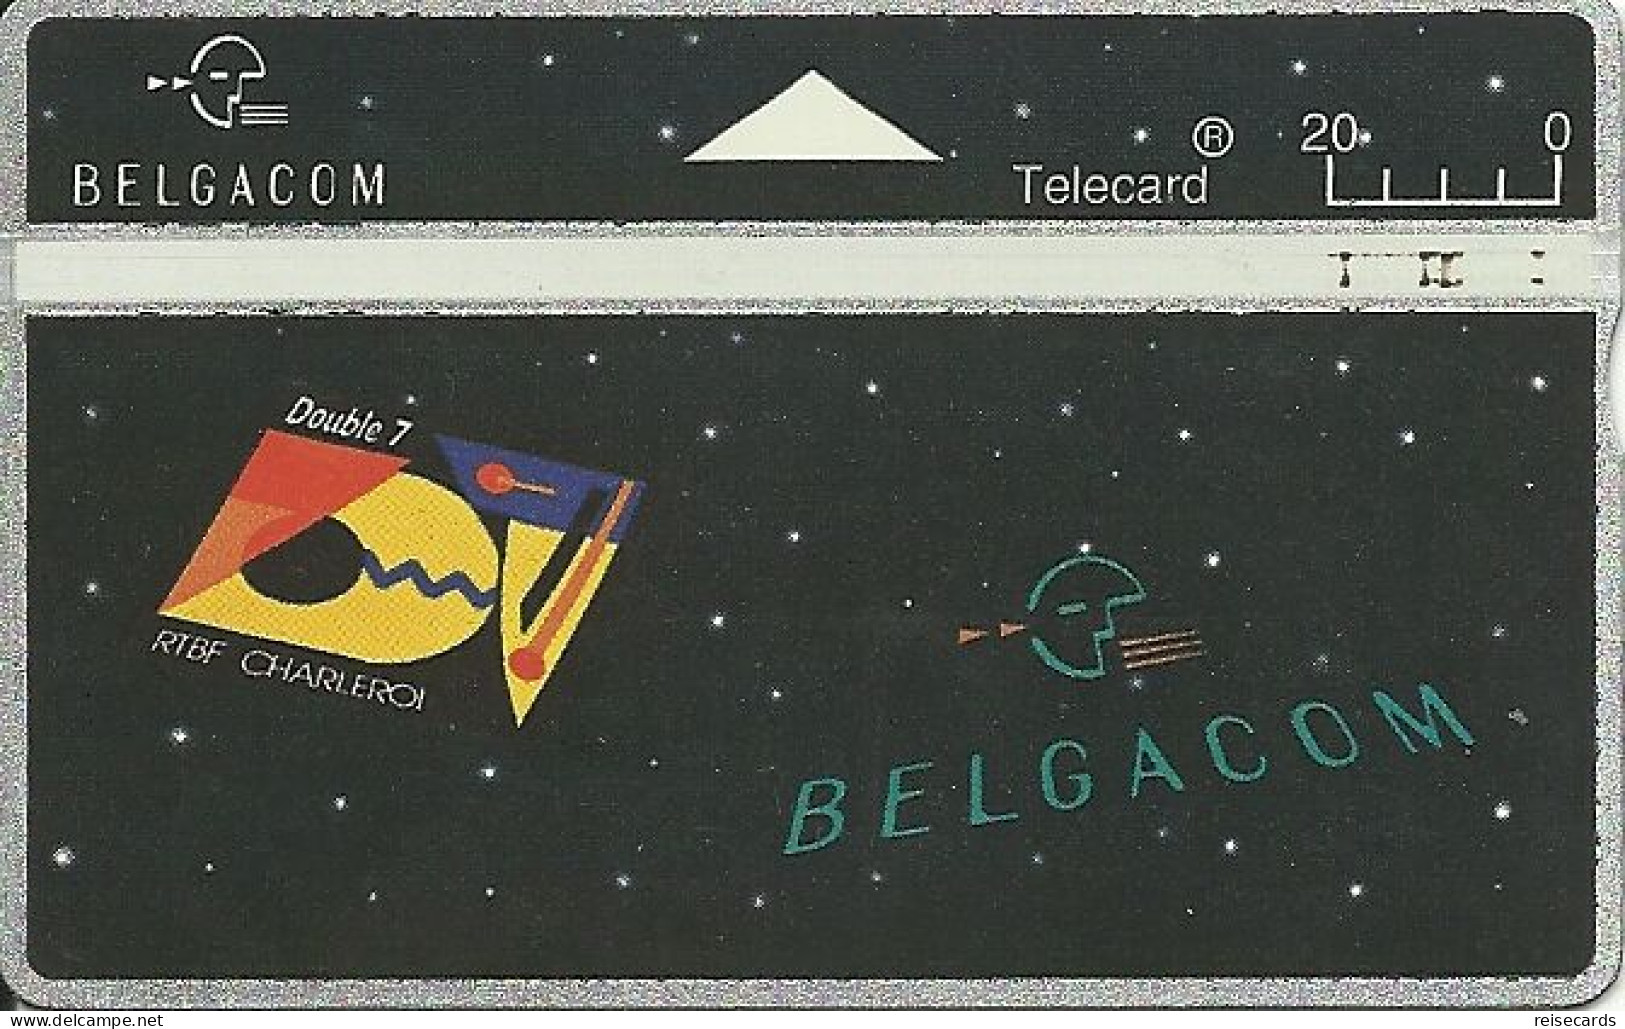 Belgium: Belgacom: 312A Double 7, RTBF Charleroi - Ohne Chip